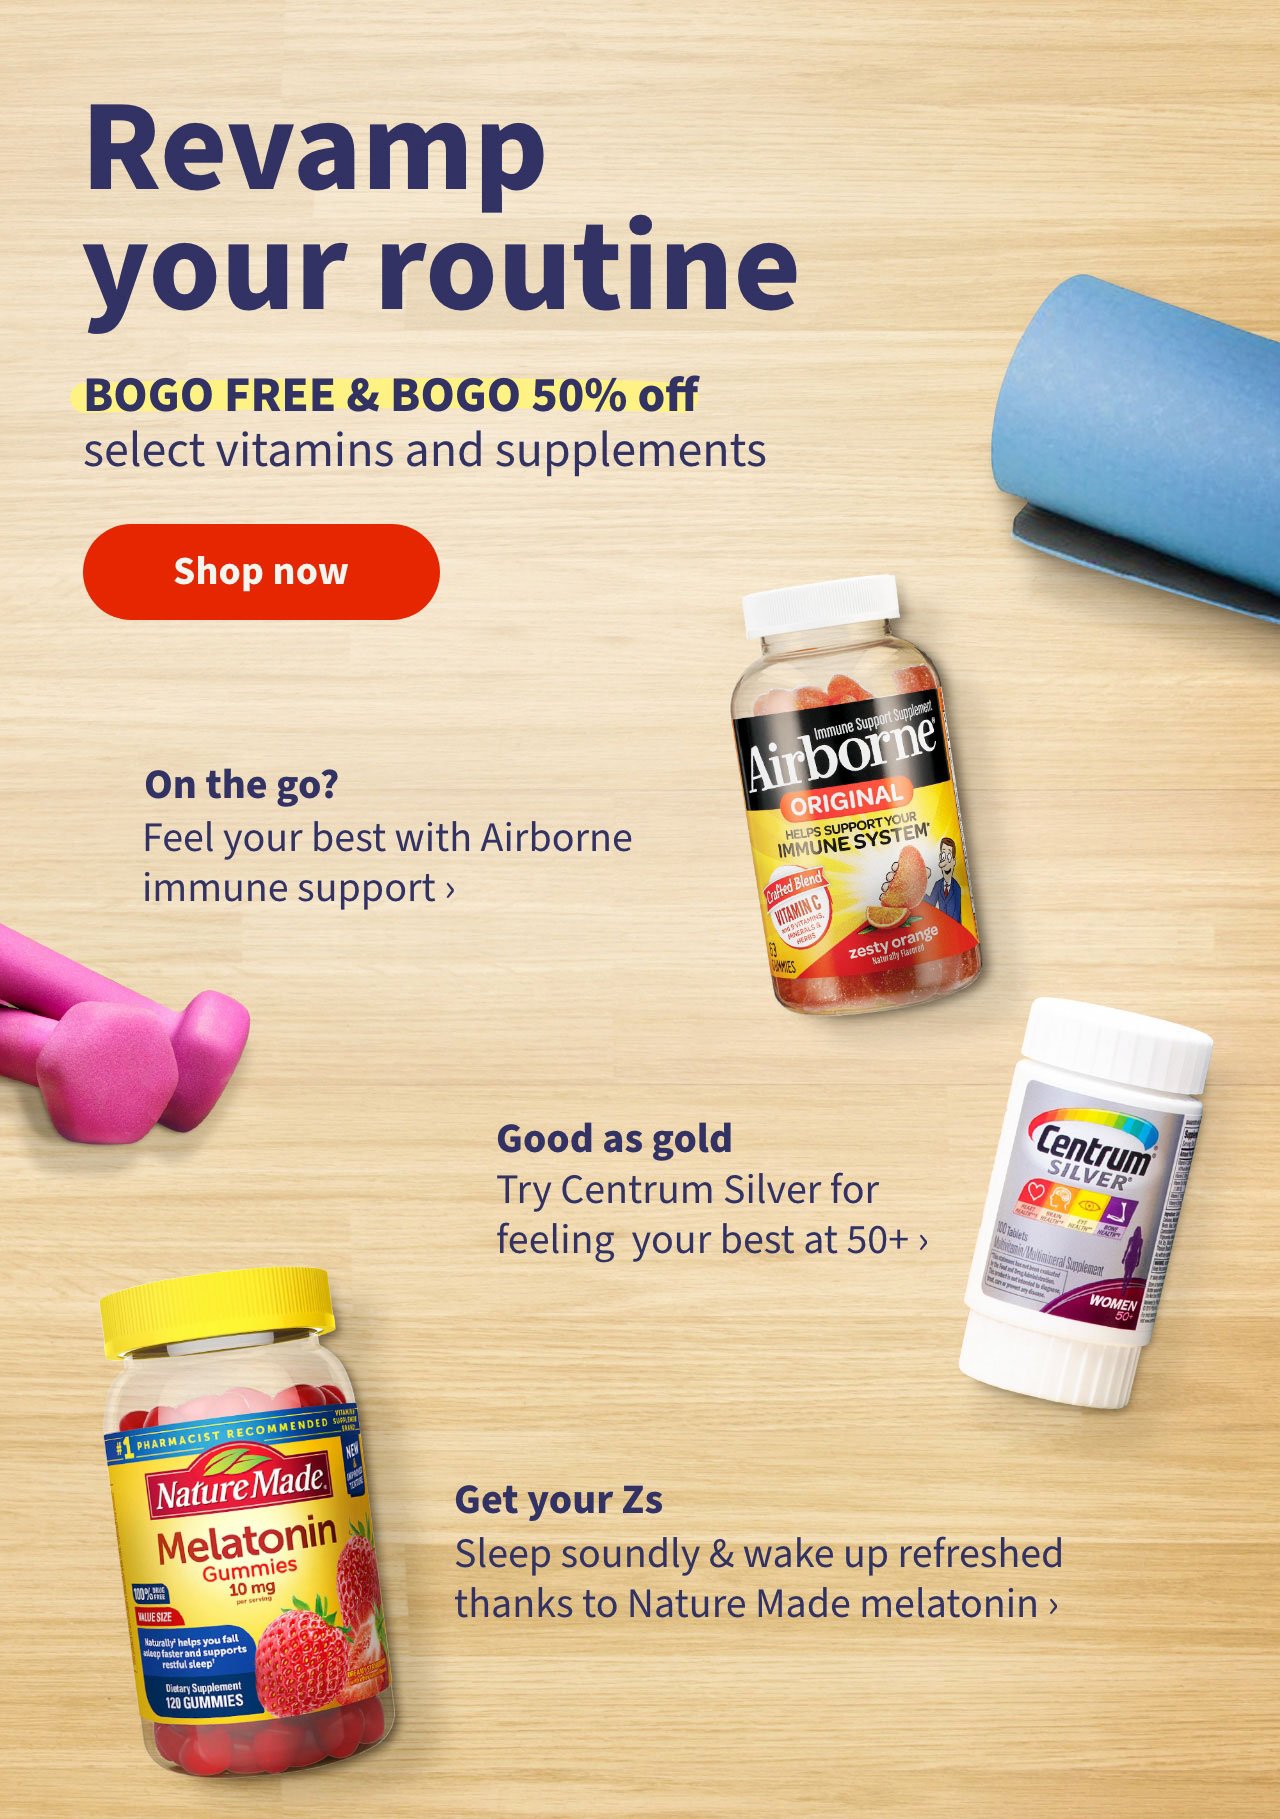 Revamp your routine. BOGO FREE & BOGO 50% off select vitamins & supplements. Shop now.